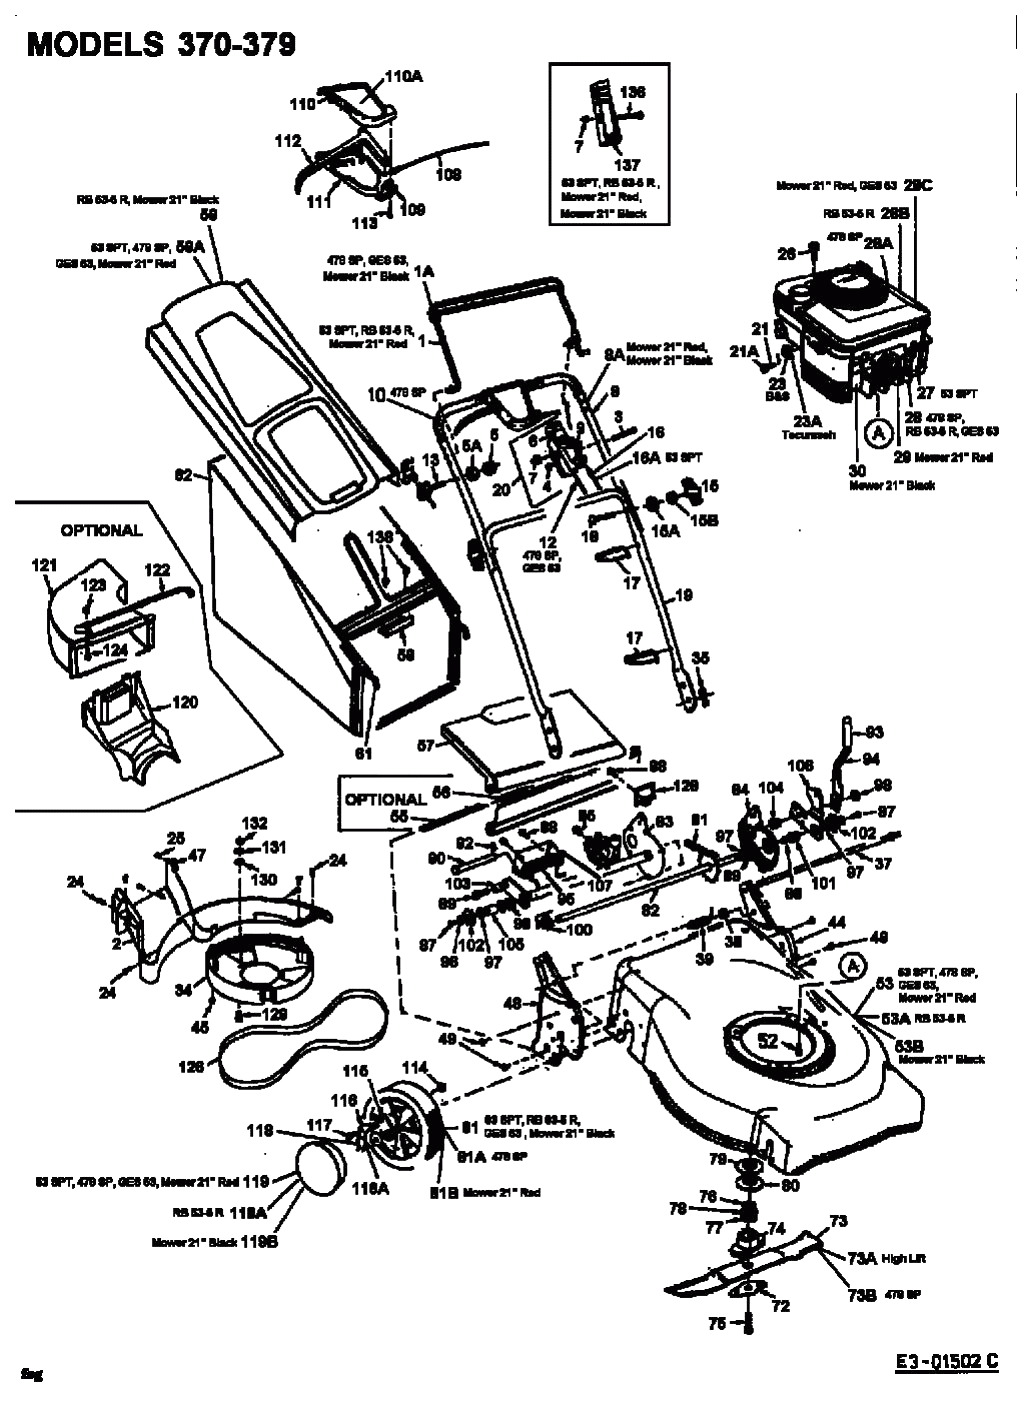 MTD Артикул 12A-378C678 (год выпуска 2002). Основная деталировка